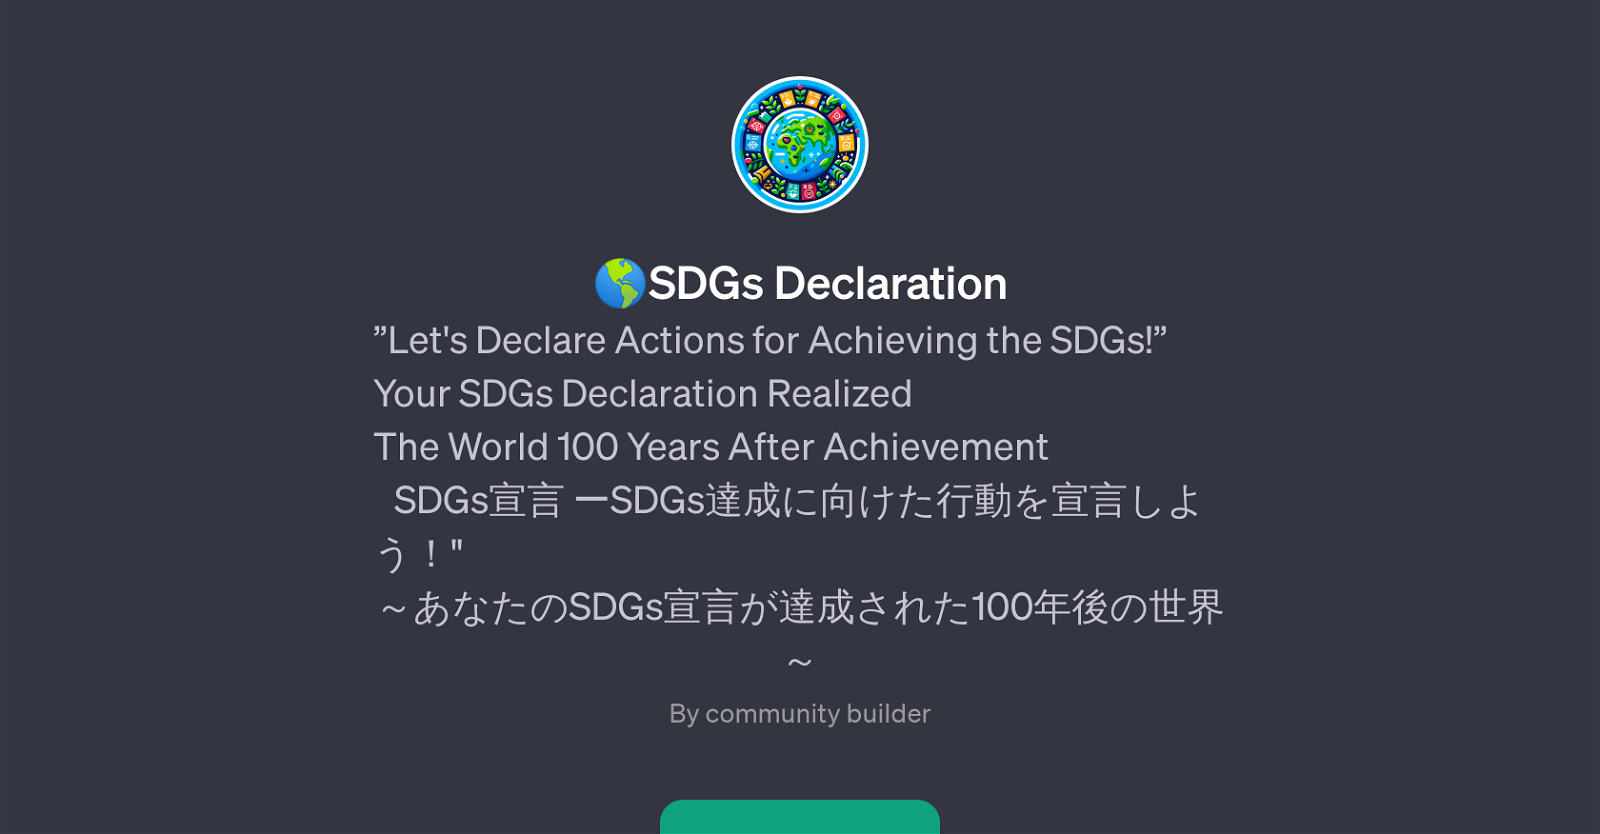 SDGs Declaration website